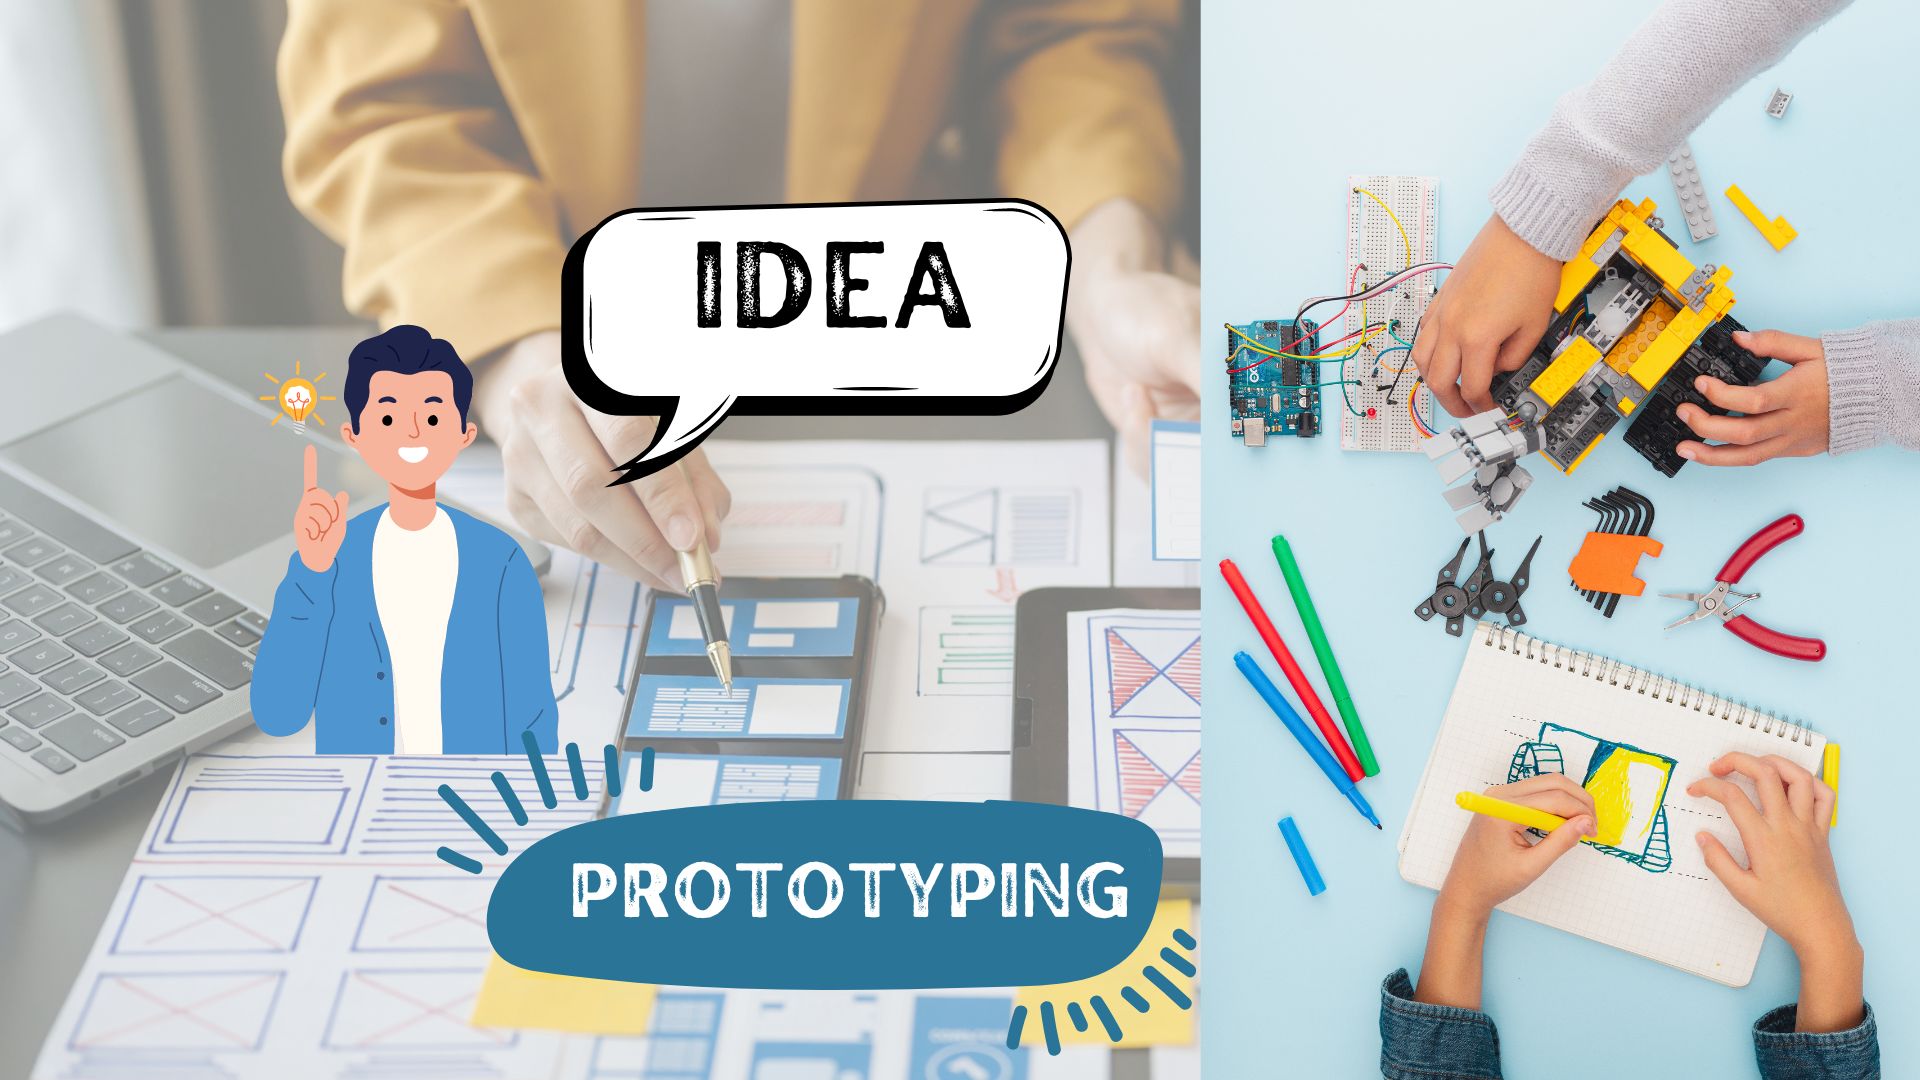 From Idea to Prototype